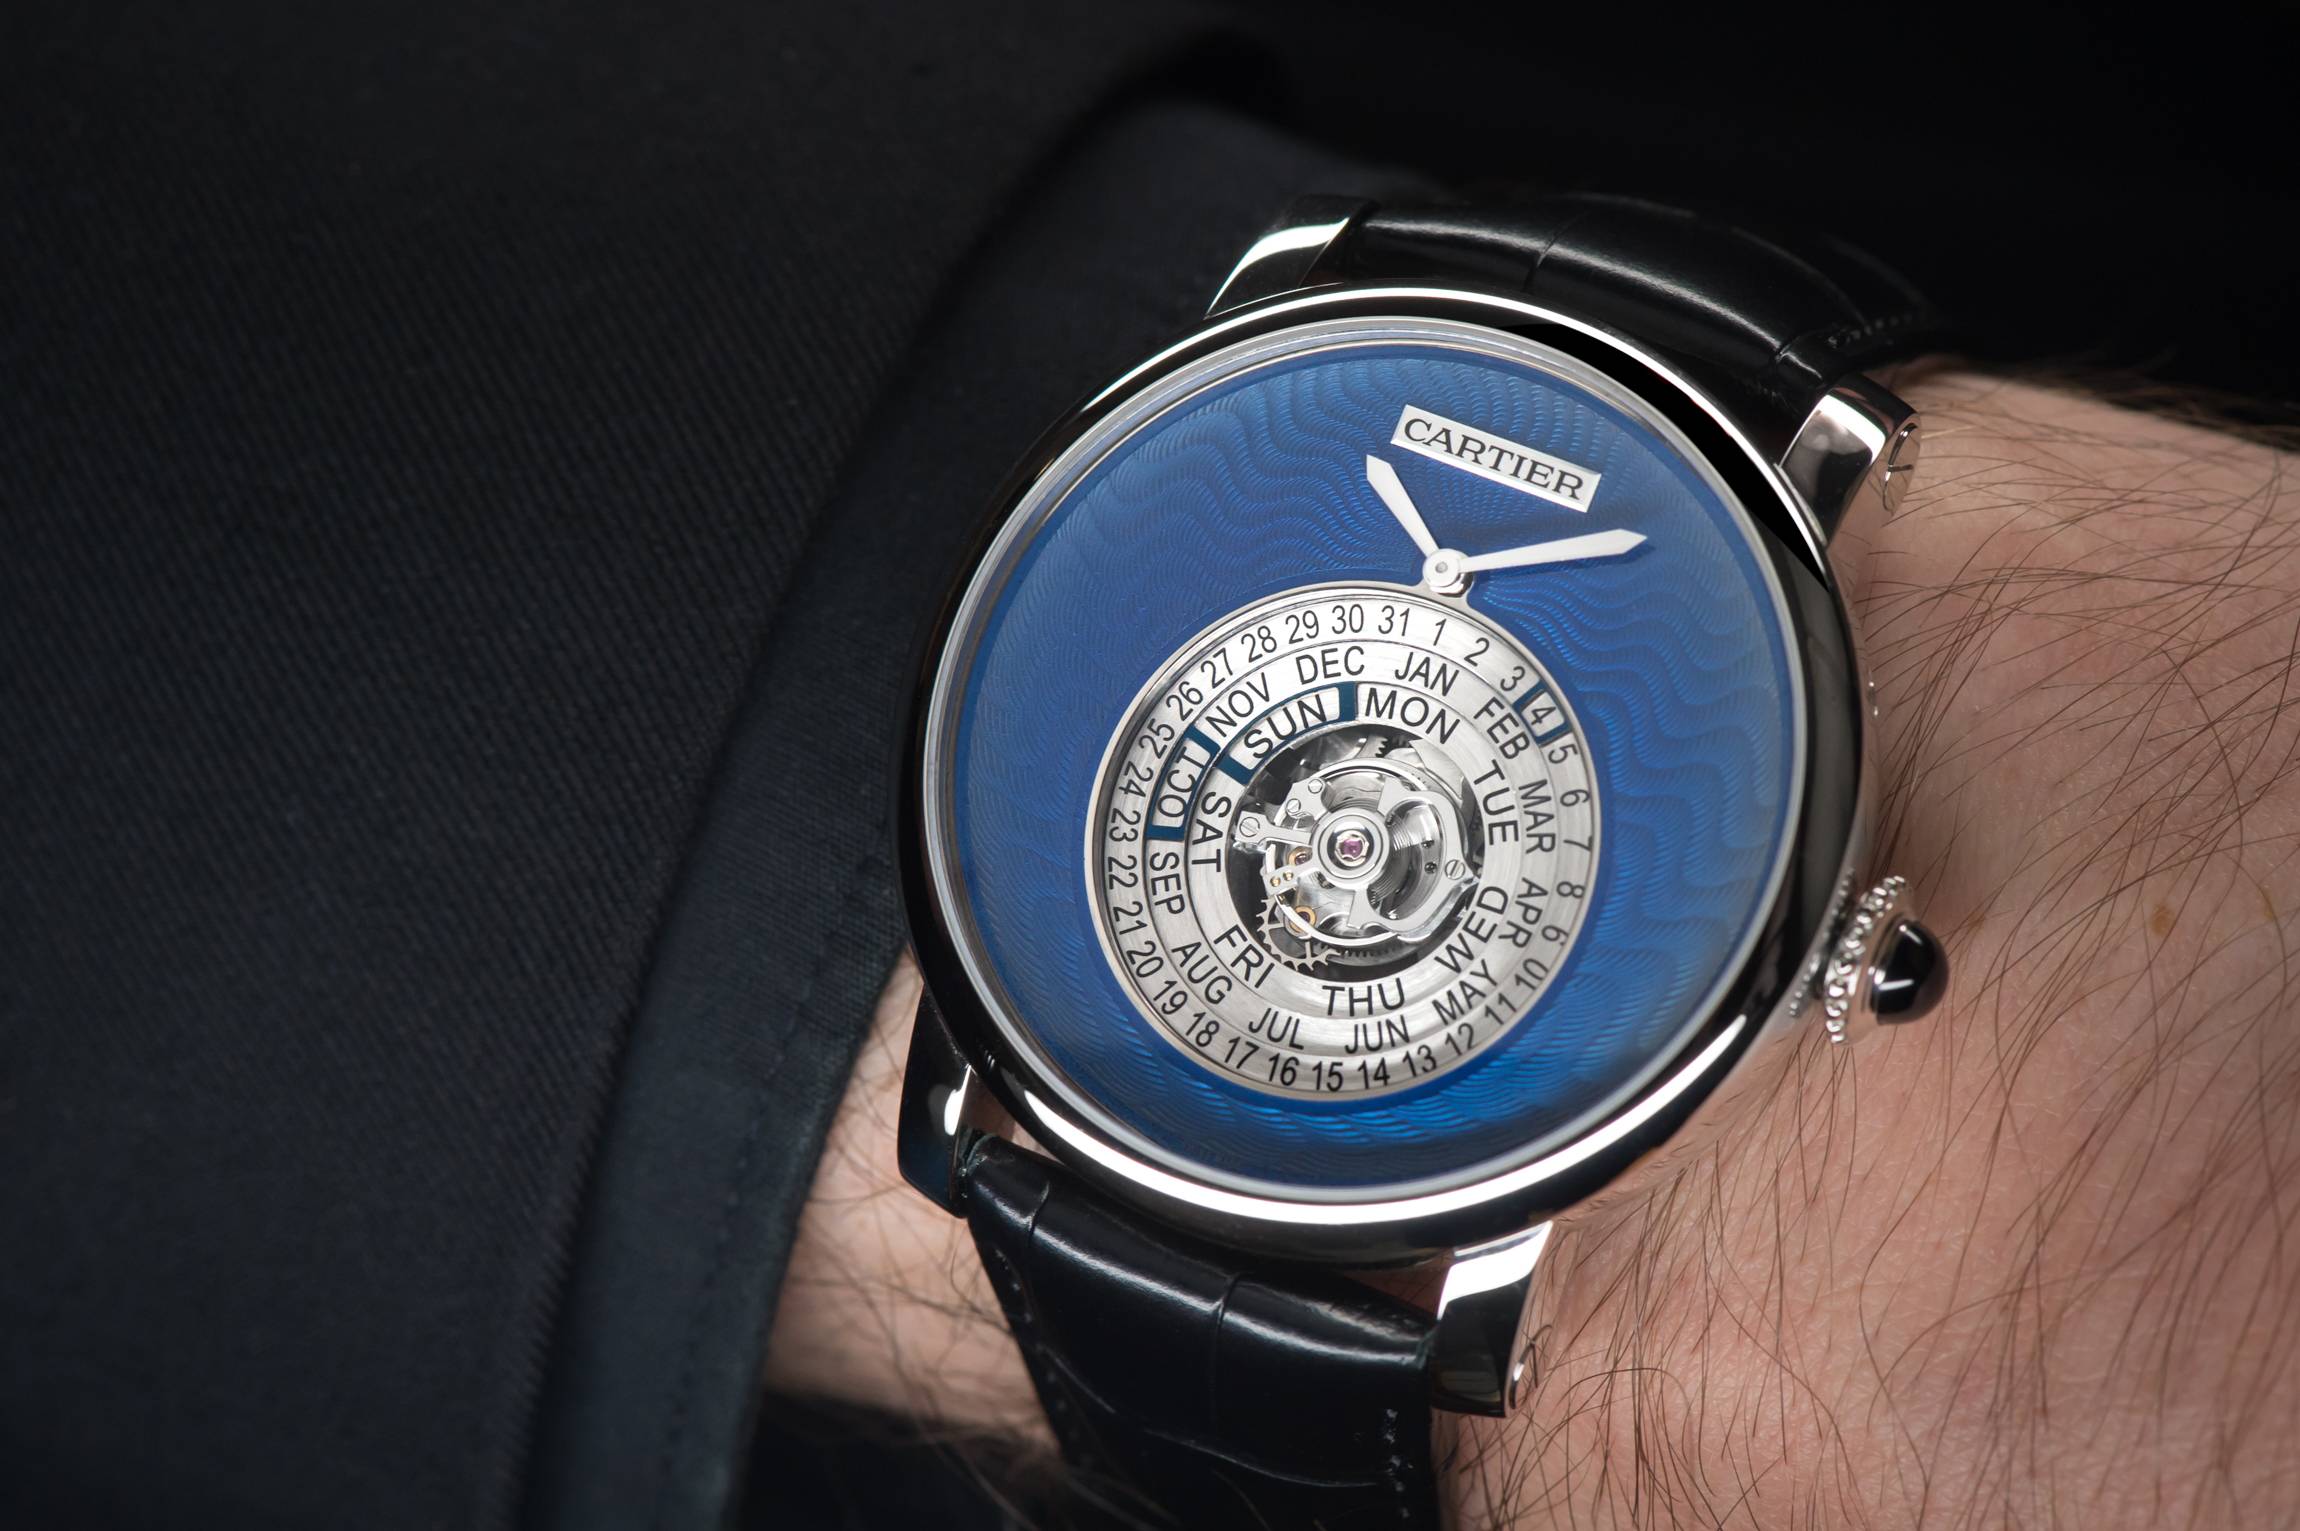 Cartier Rotonde de Cartier Astrocalendaire, Tourbillon complication, perpetual calendar with circular display Calibre 9459 MC "Poinçon de genève" certified watch wrist